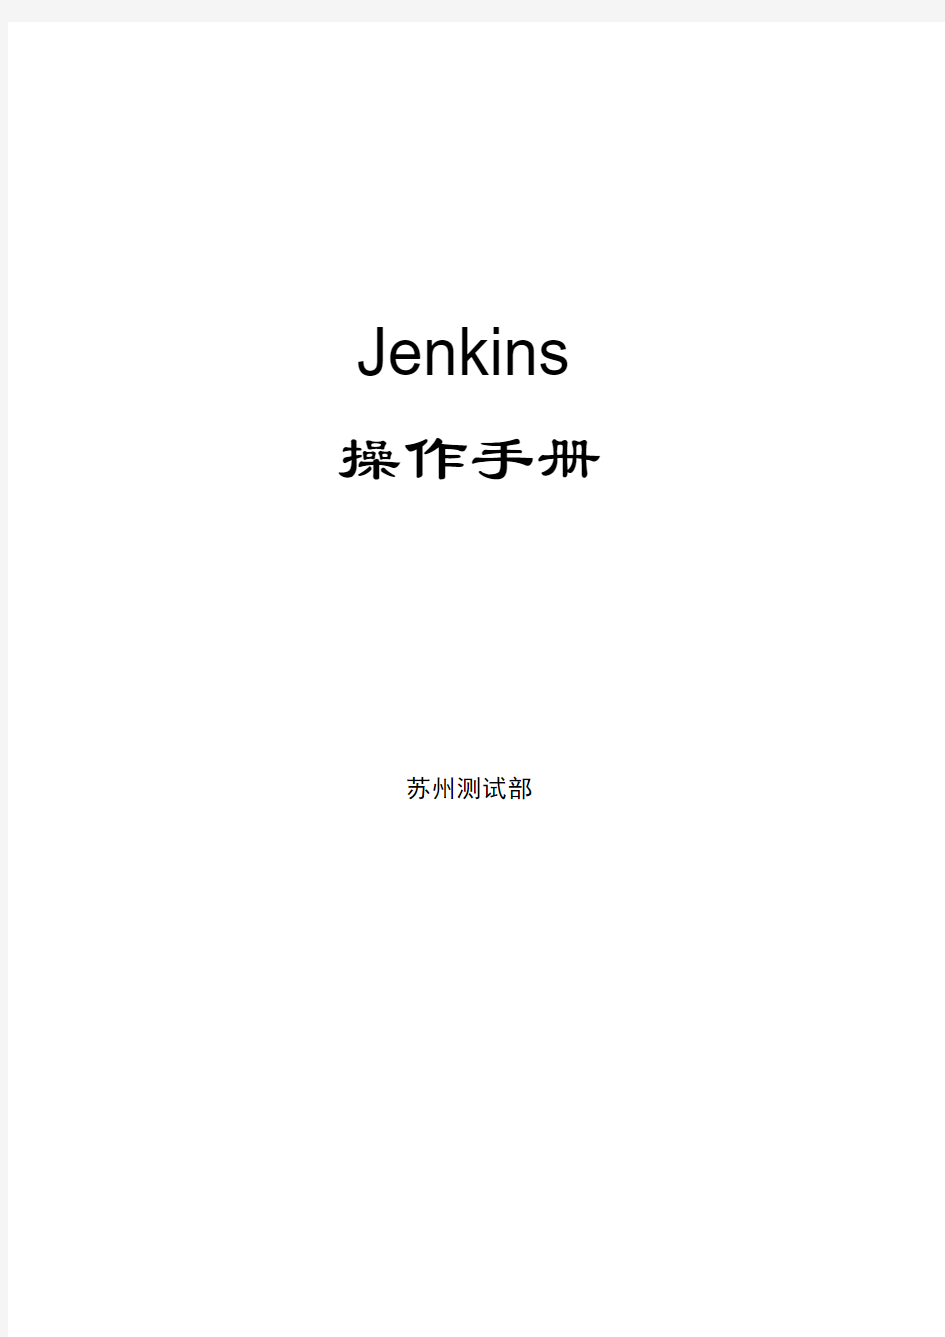 jenkins中文使用手册